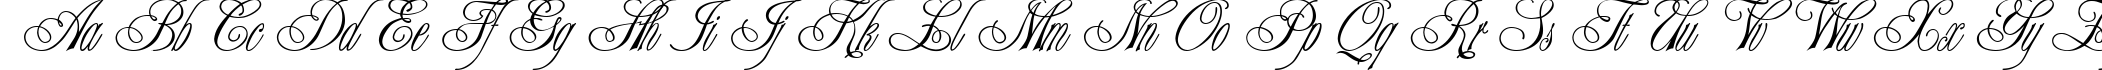 Пример написания английского алфавита шрифтом Alexei CopperplateITC-Normal